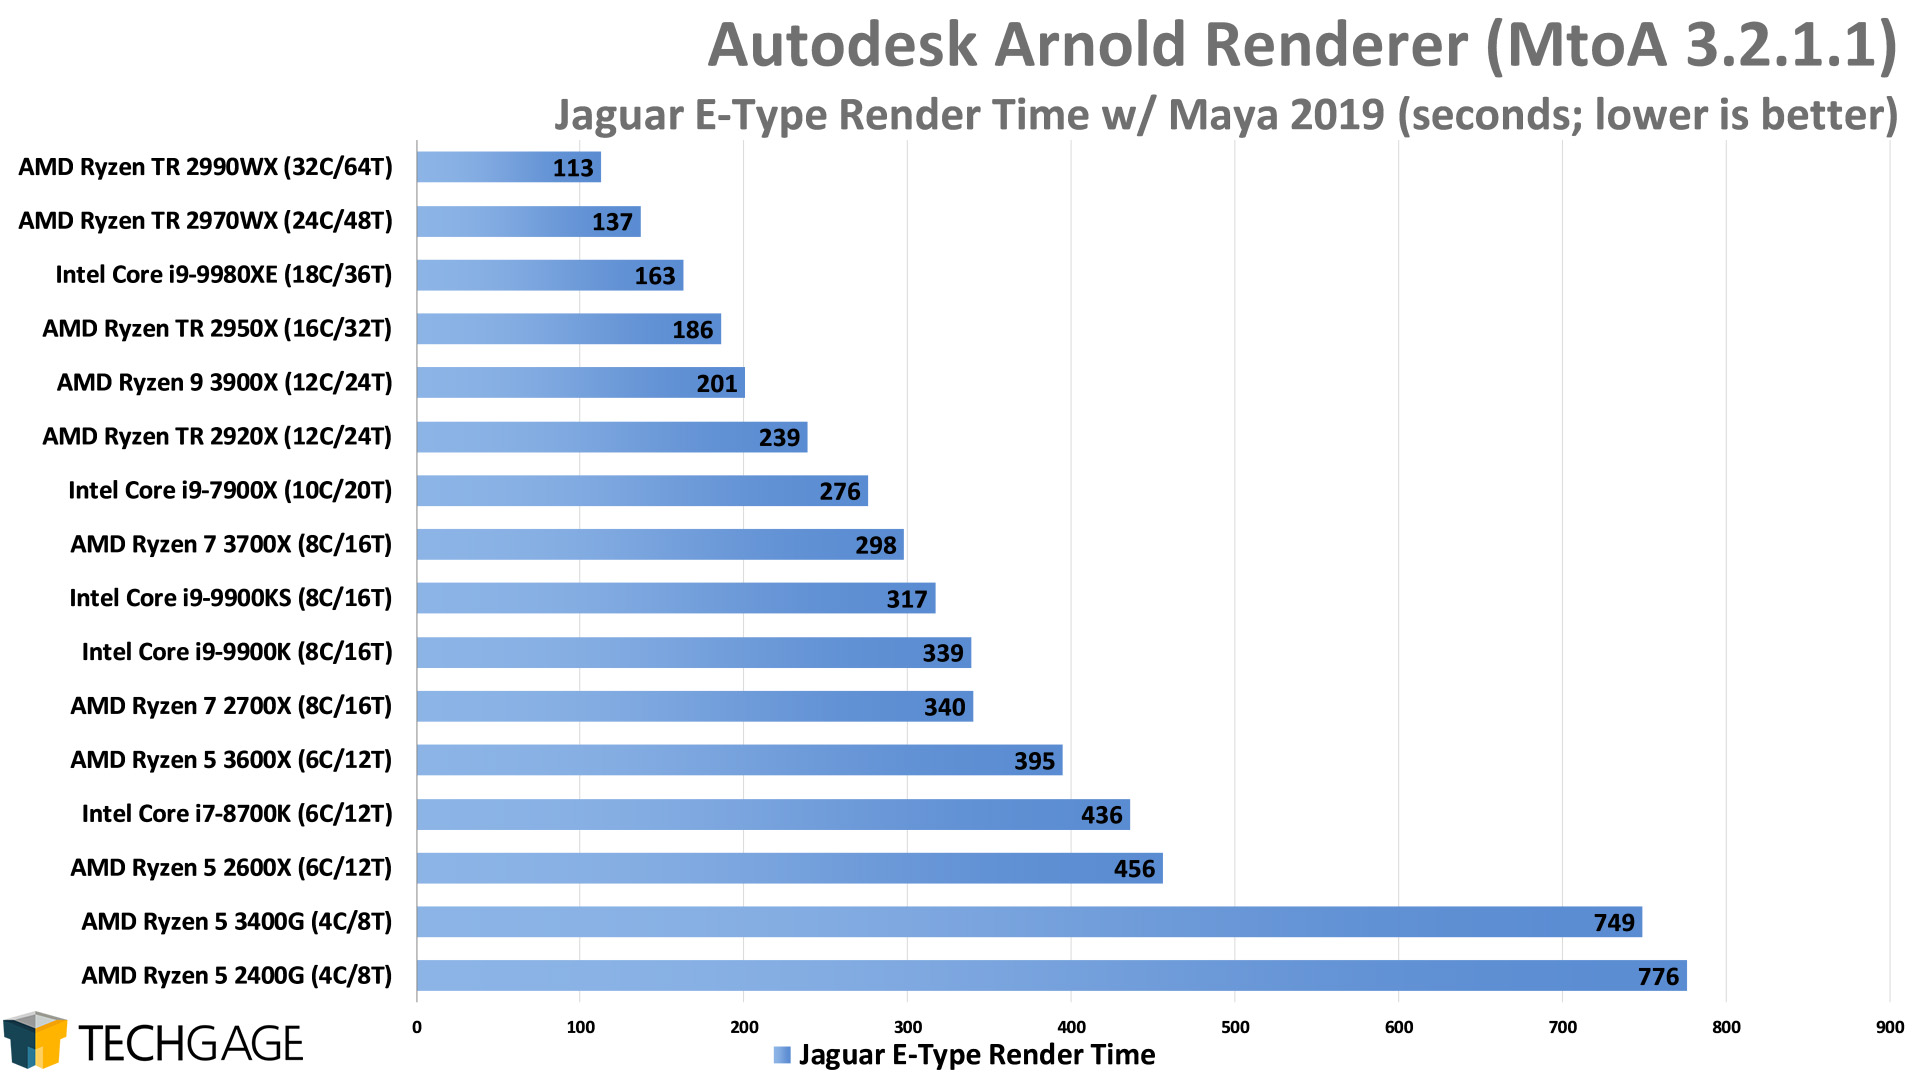 Autodesk Arnold CPU Render Performance - Jaguar E-Type Scene (Intel Core i9-9900KS)